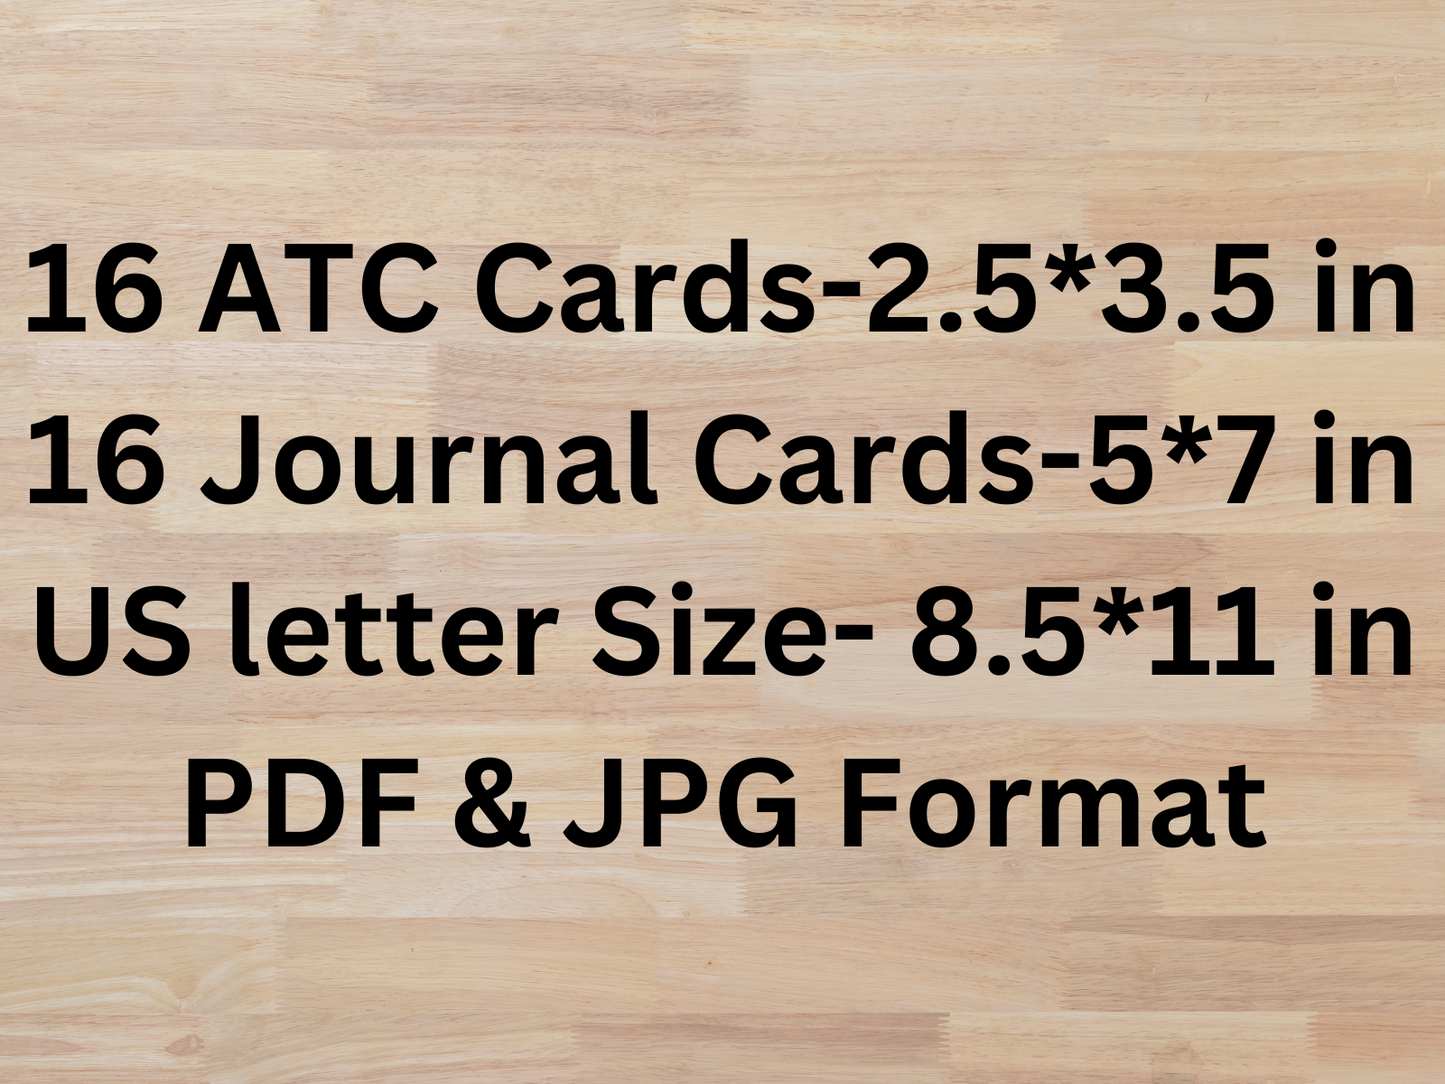 Magical Potions-Journal Cards & ATC Cards, Digital Download